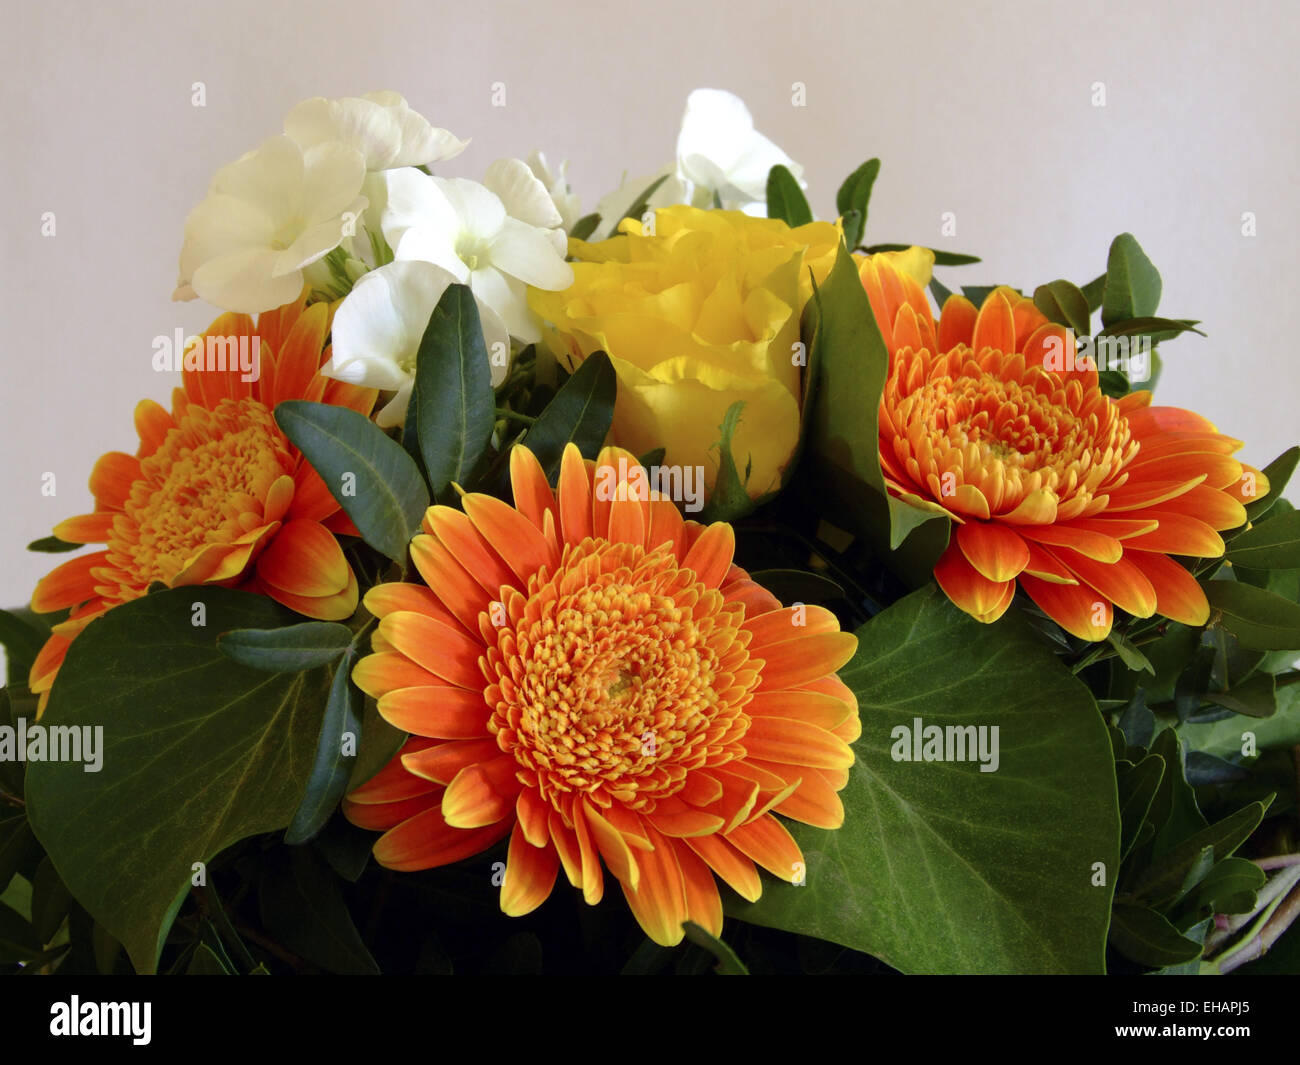 Blumenstrauß / bunch of flowers Stock Photo